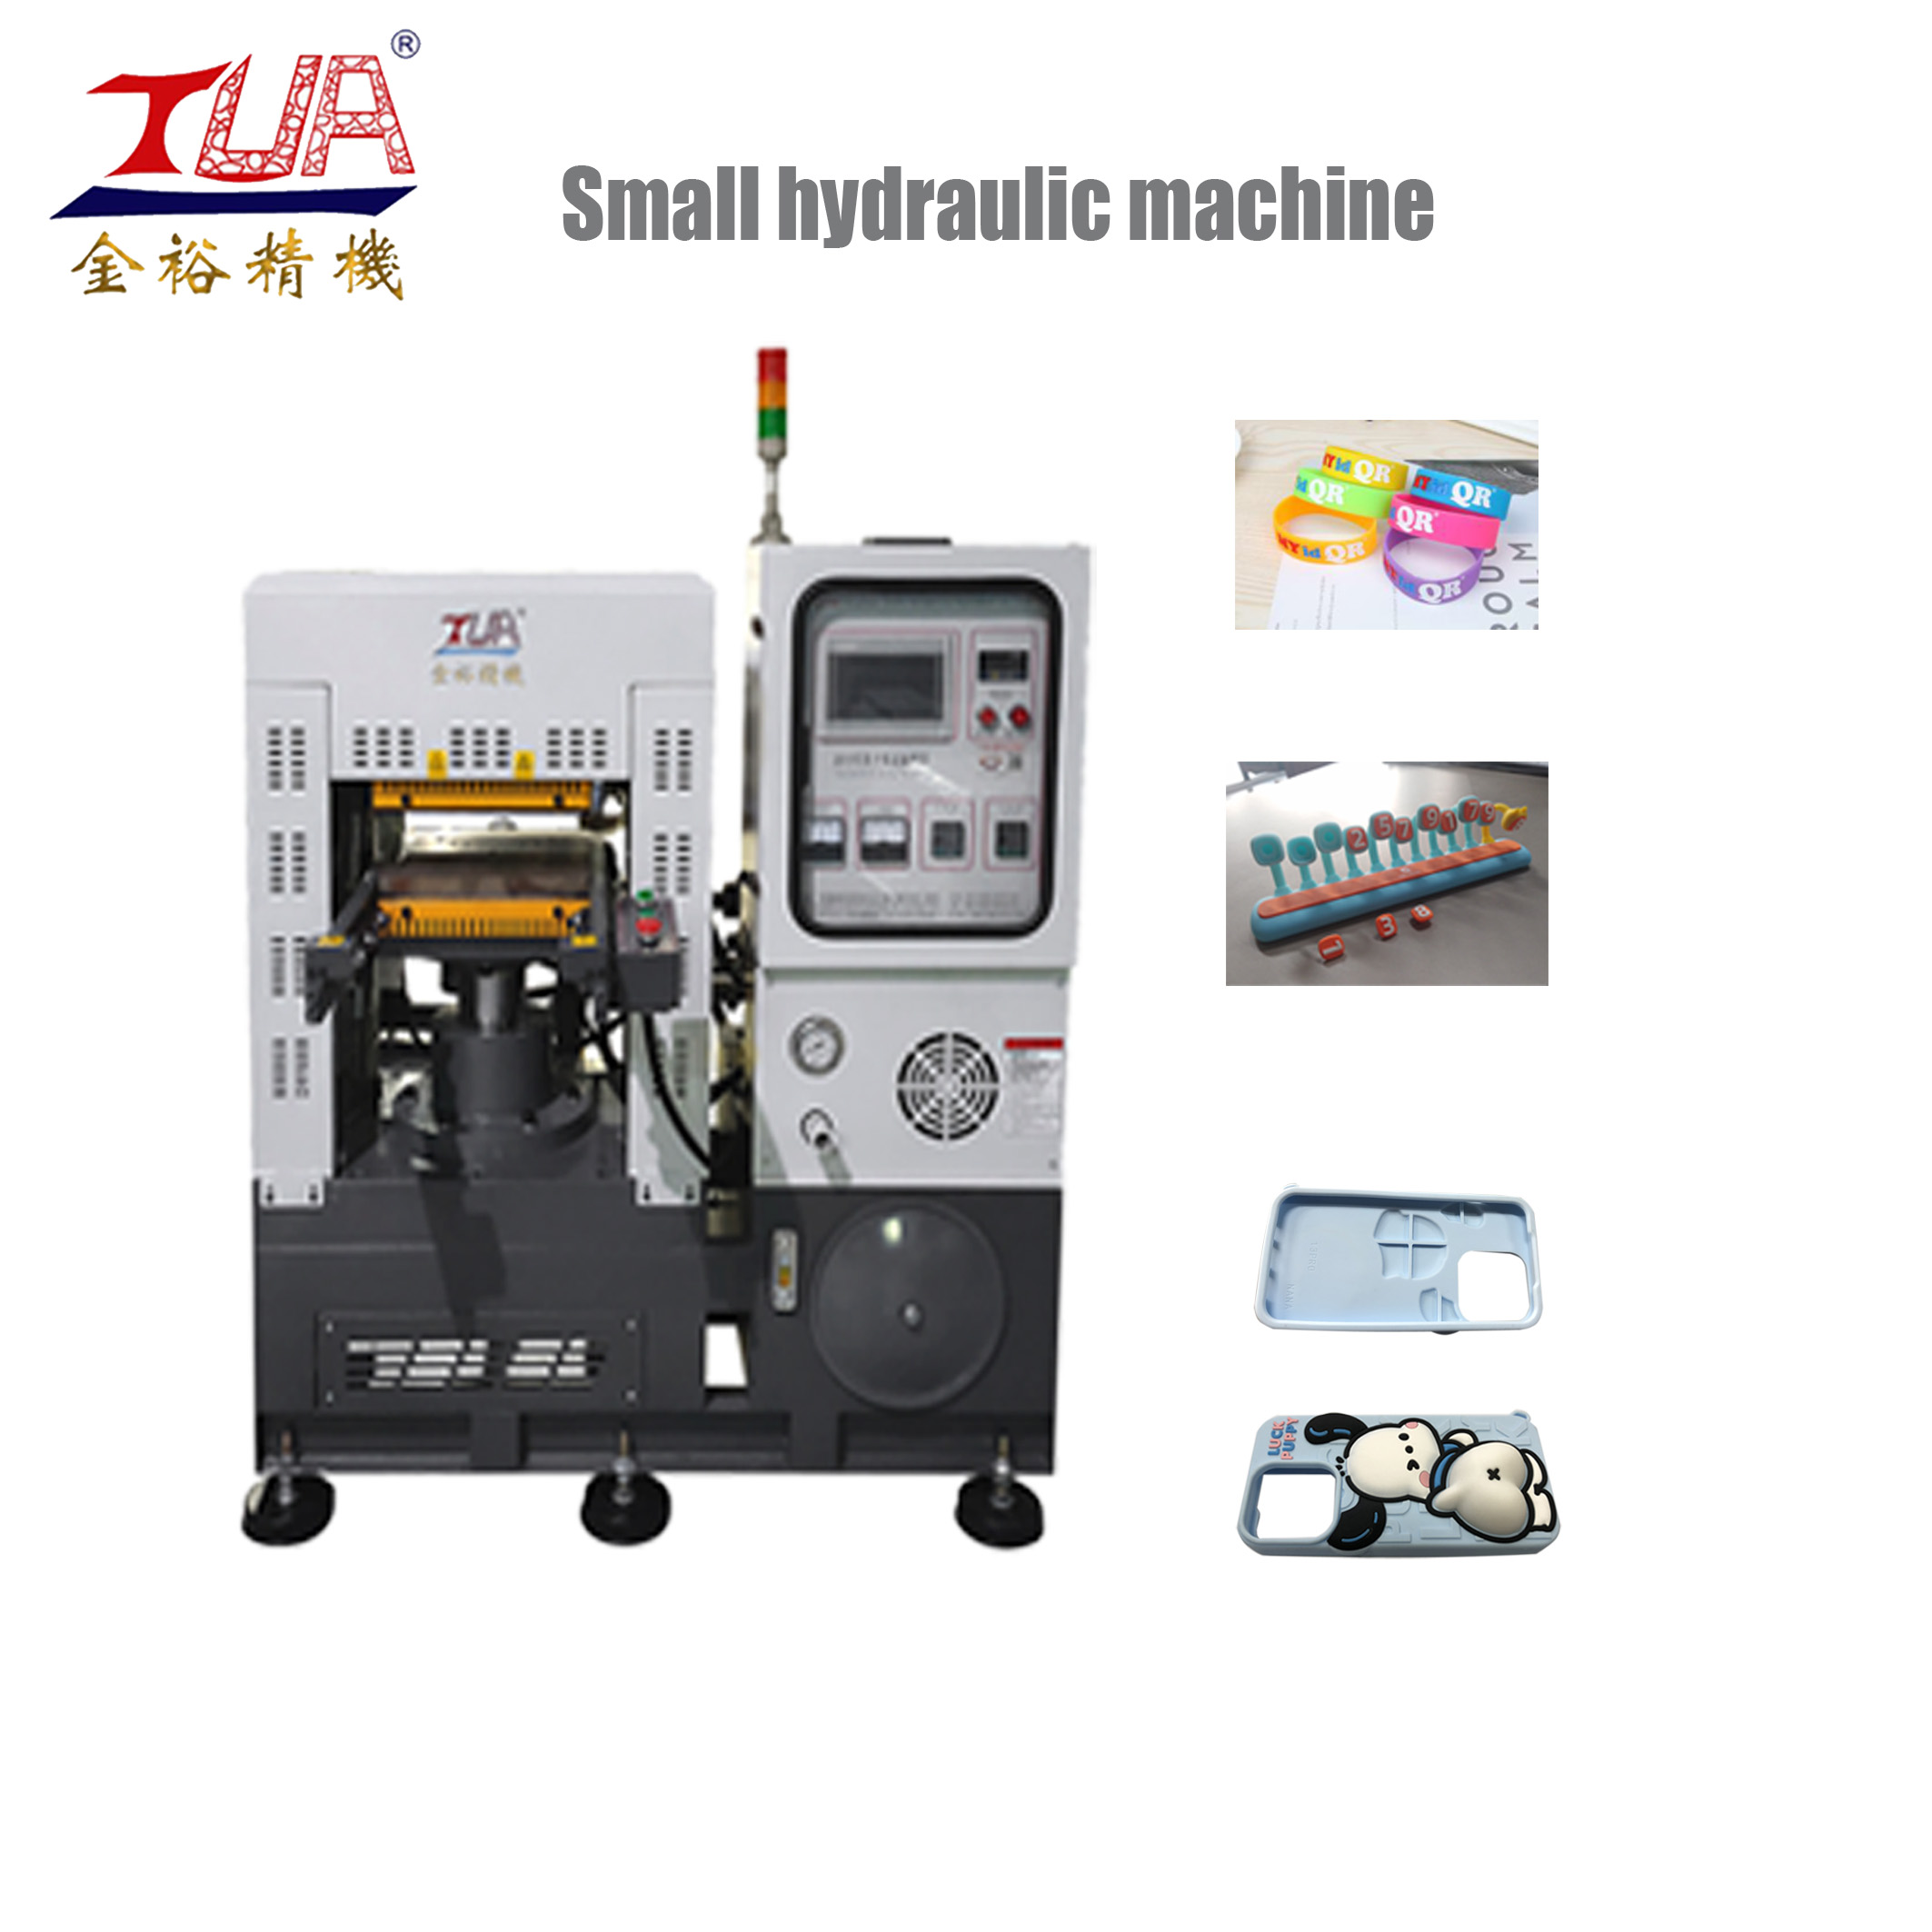 Hydraulic machine